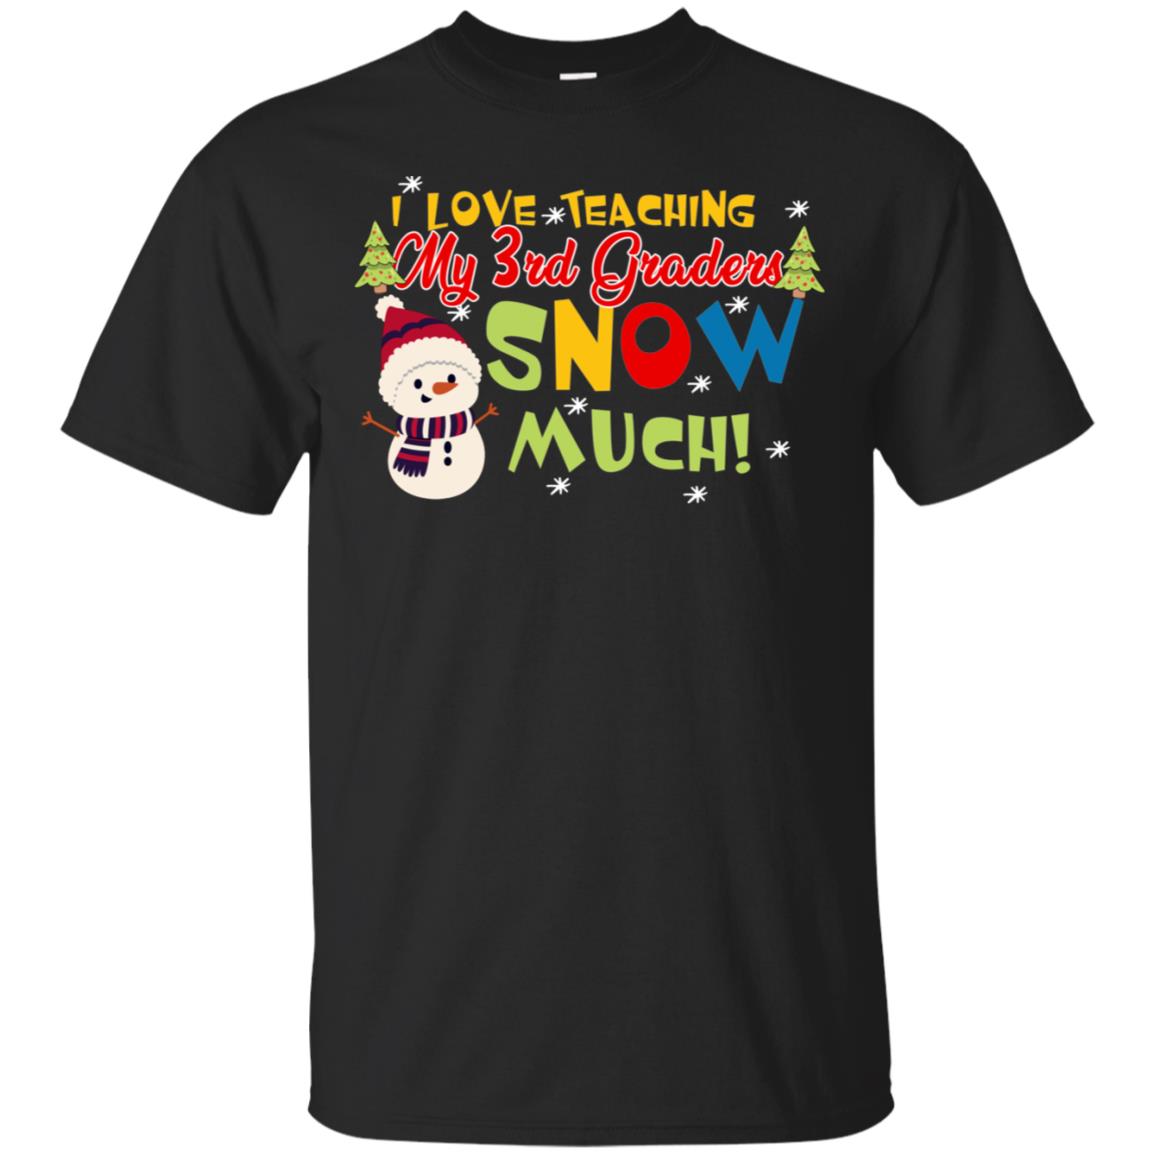 I Love Teaching My 3rd Graders Snow Much X-mas Gift Shirt For TeachersG200 Gildan Ultra Cotton T-Shirt